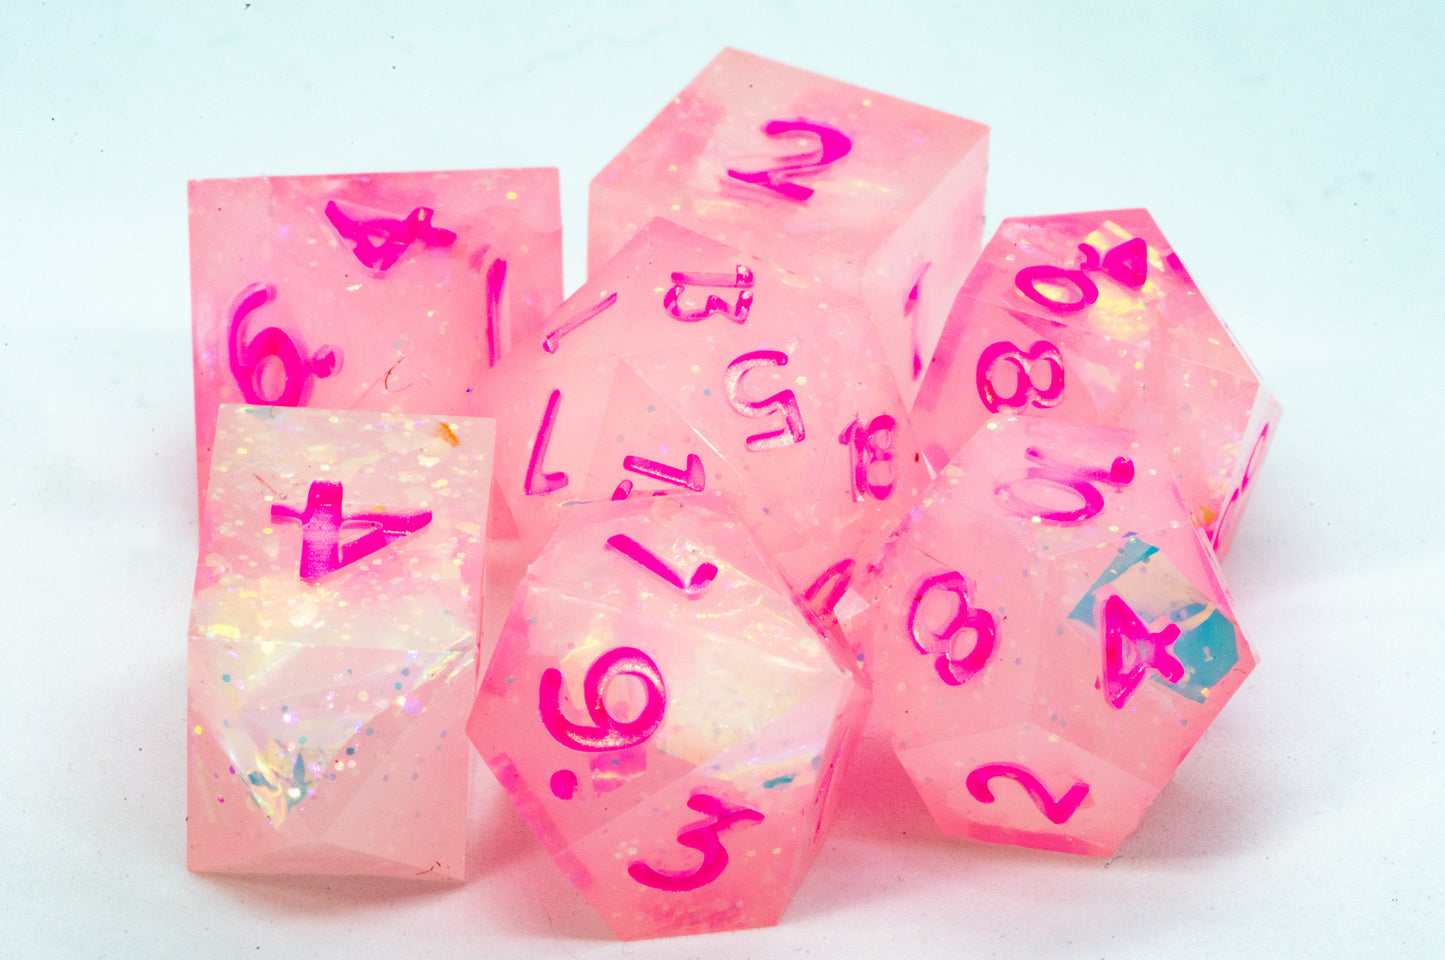 Dreamy opals 7 rpg dice set